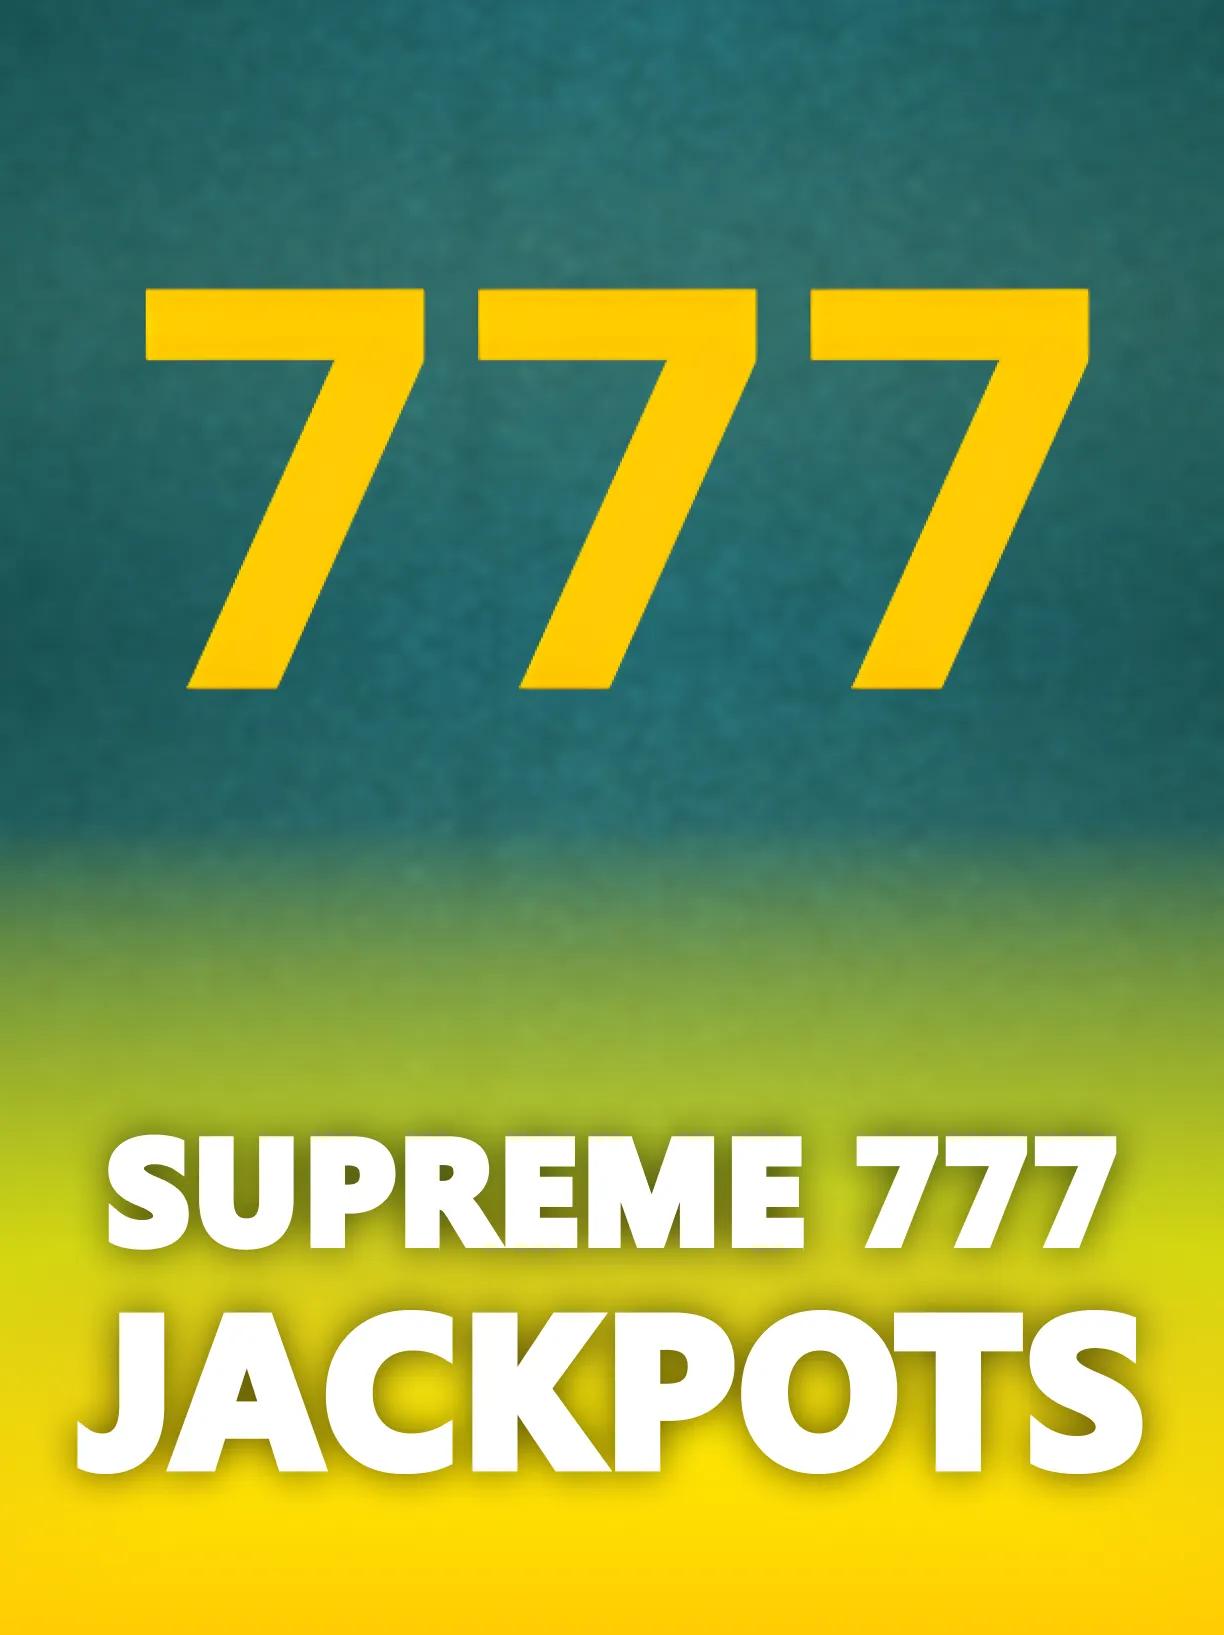 Supreme 777 - JACKPOTS -